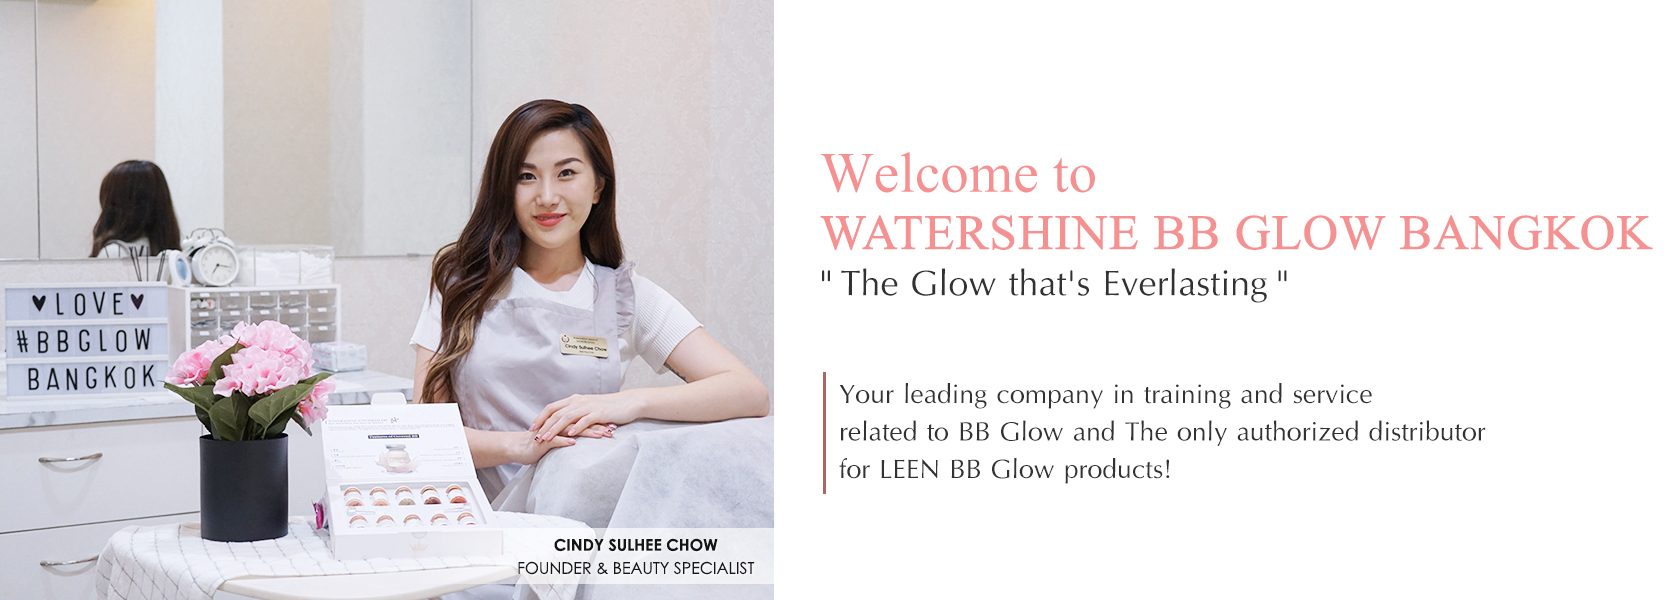 Welcome to Watershine BB Glow Bangkok-3.3